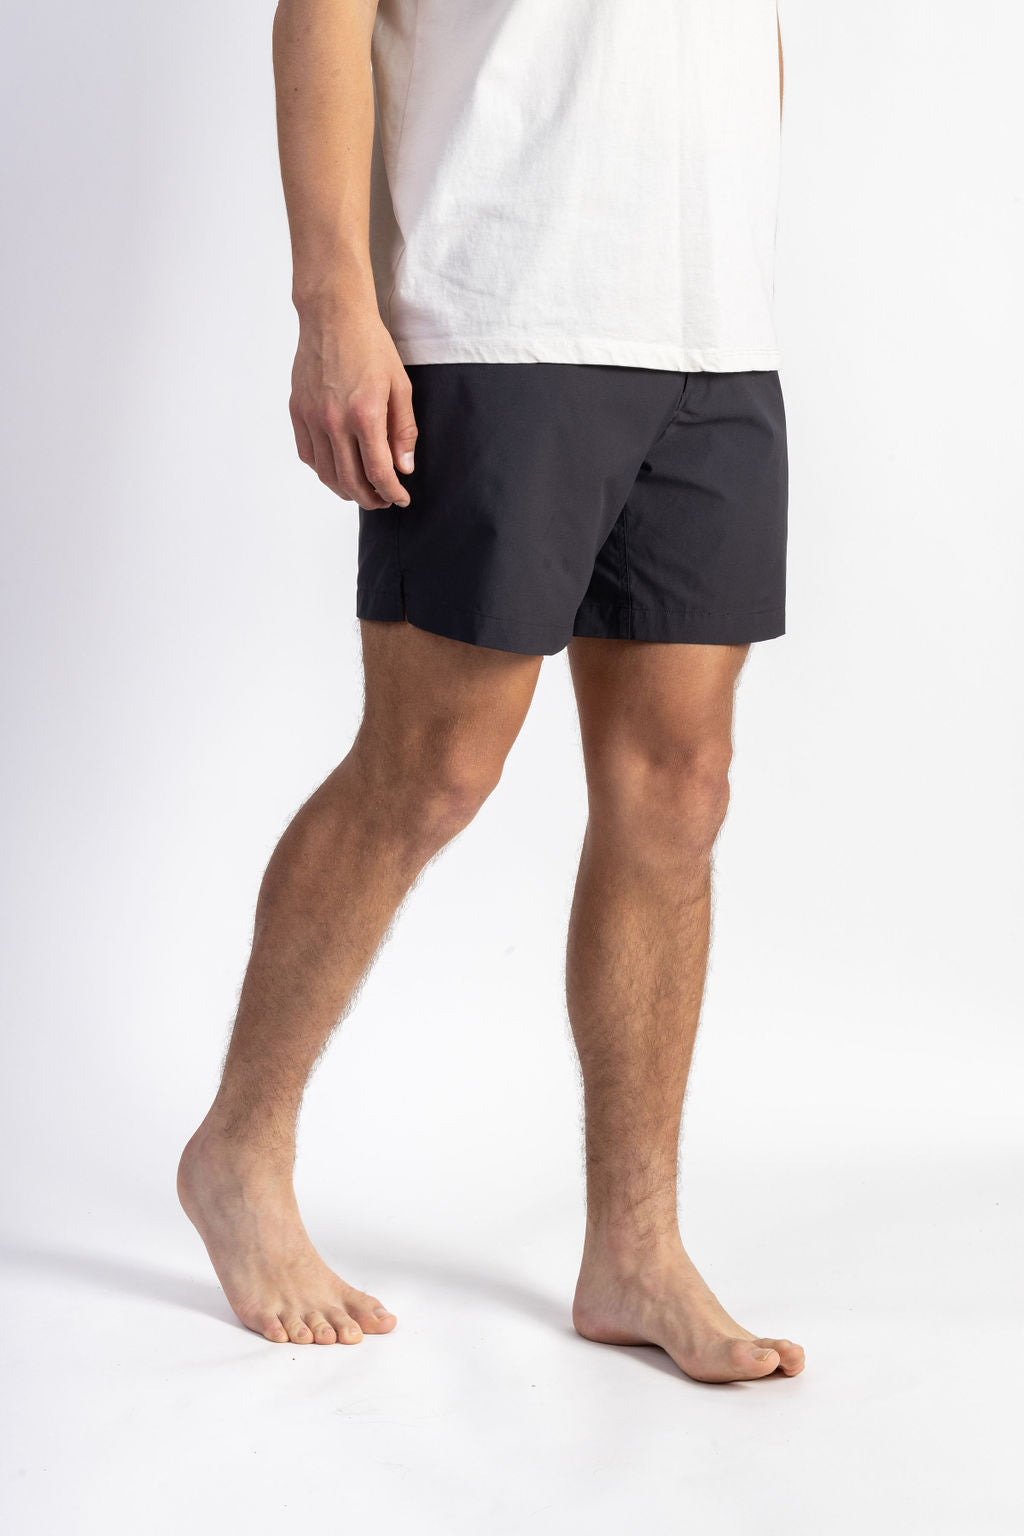 A man wearing a Black walk short underwear with white shirt